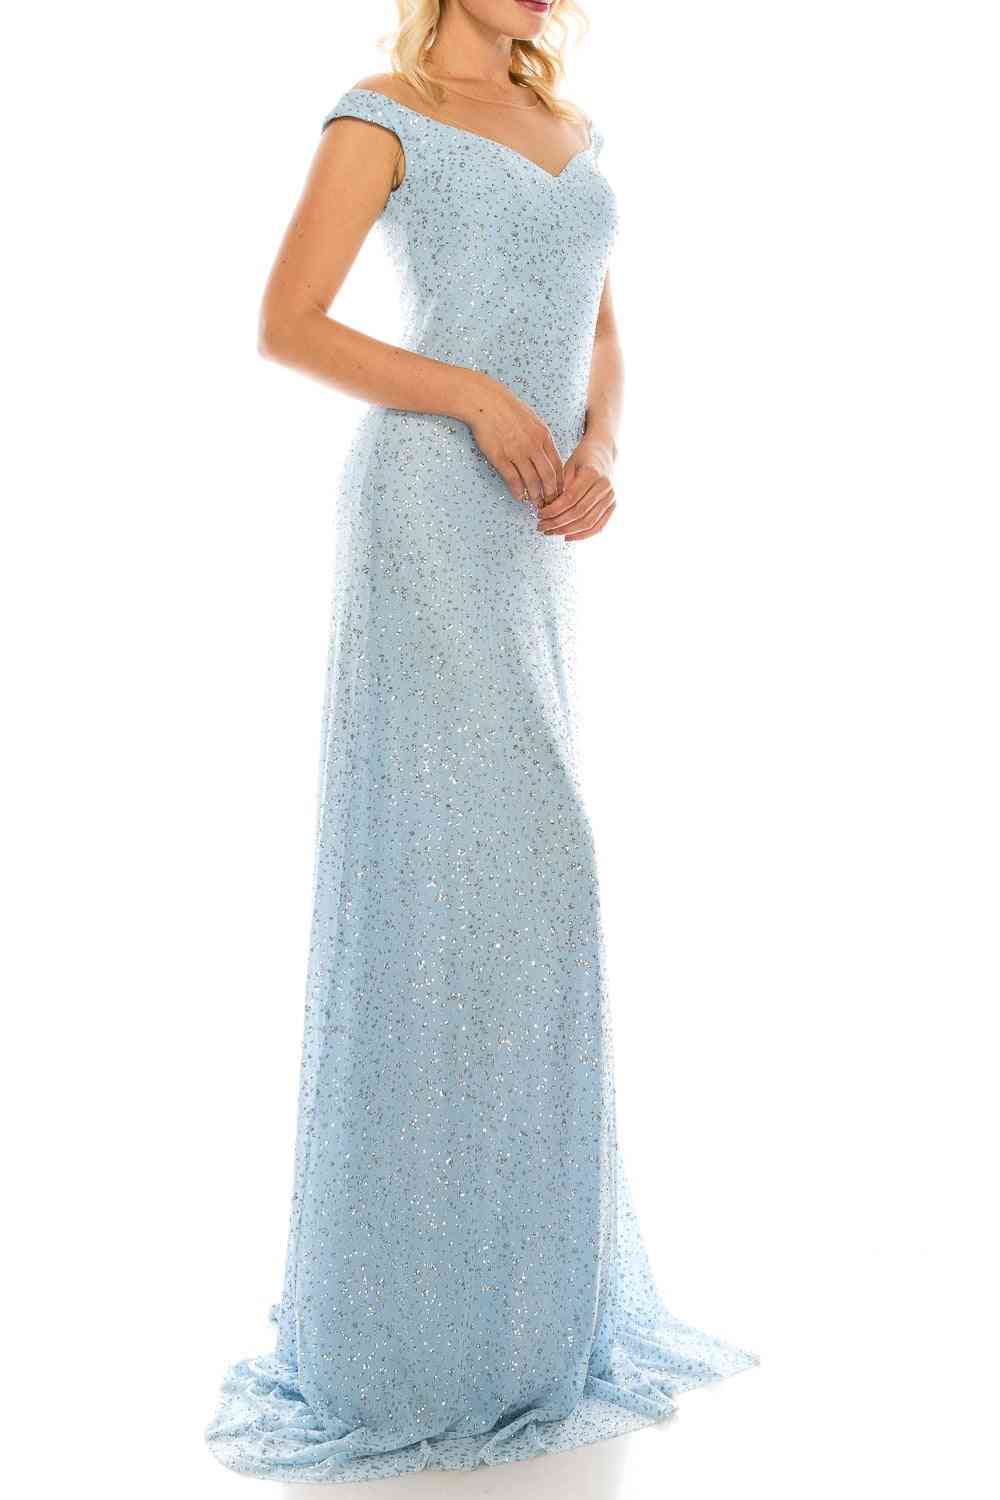 Glittery Mesh, Portrait Neckline Evening Dress